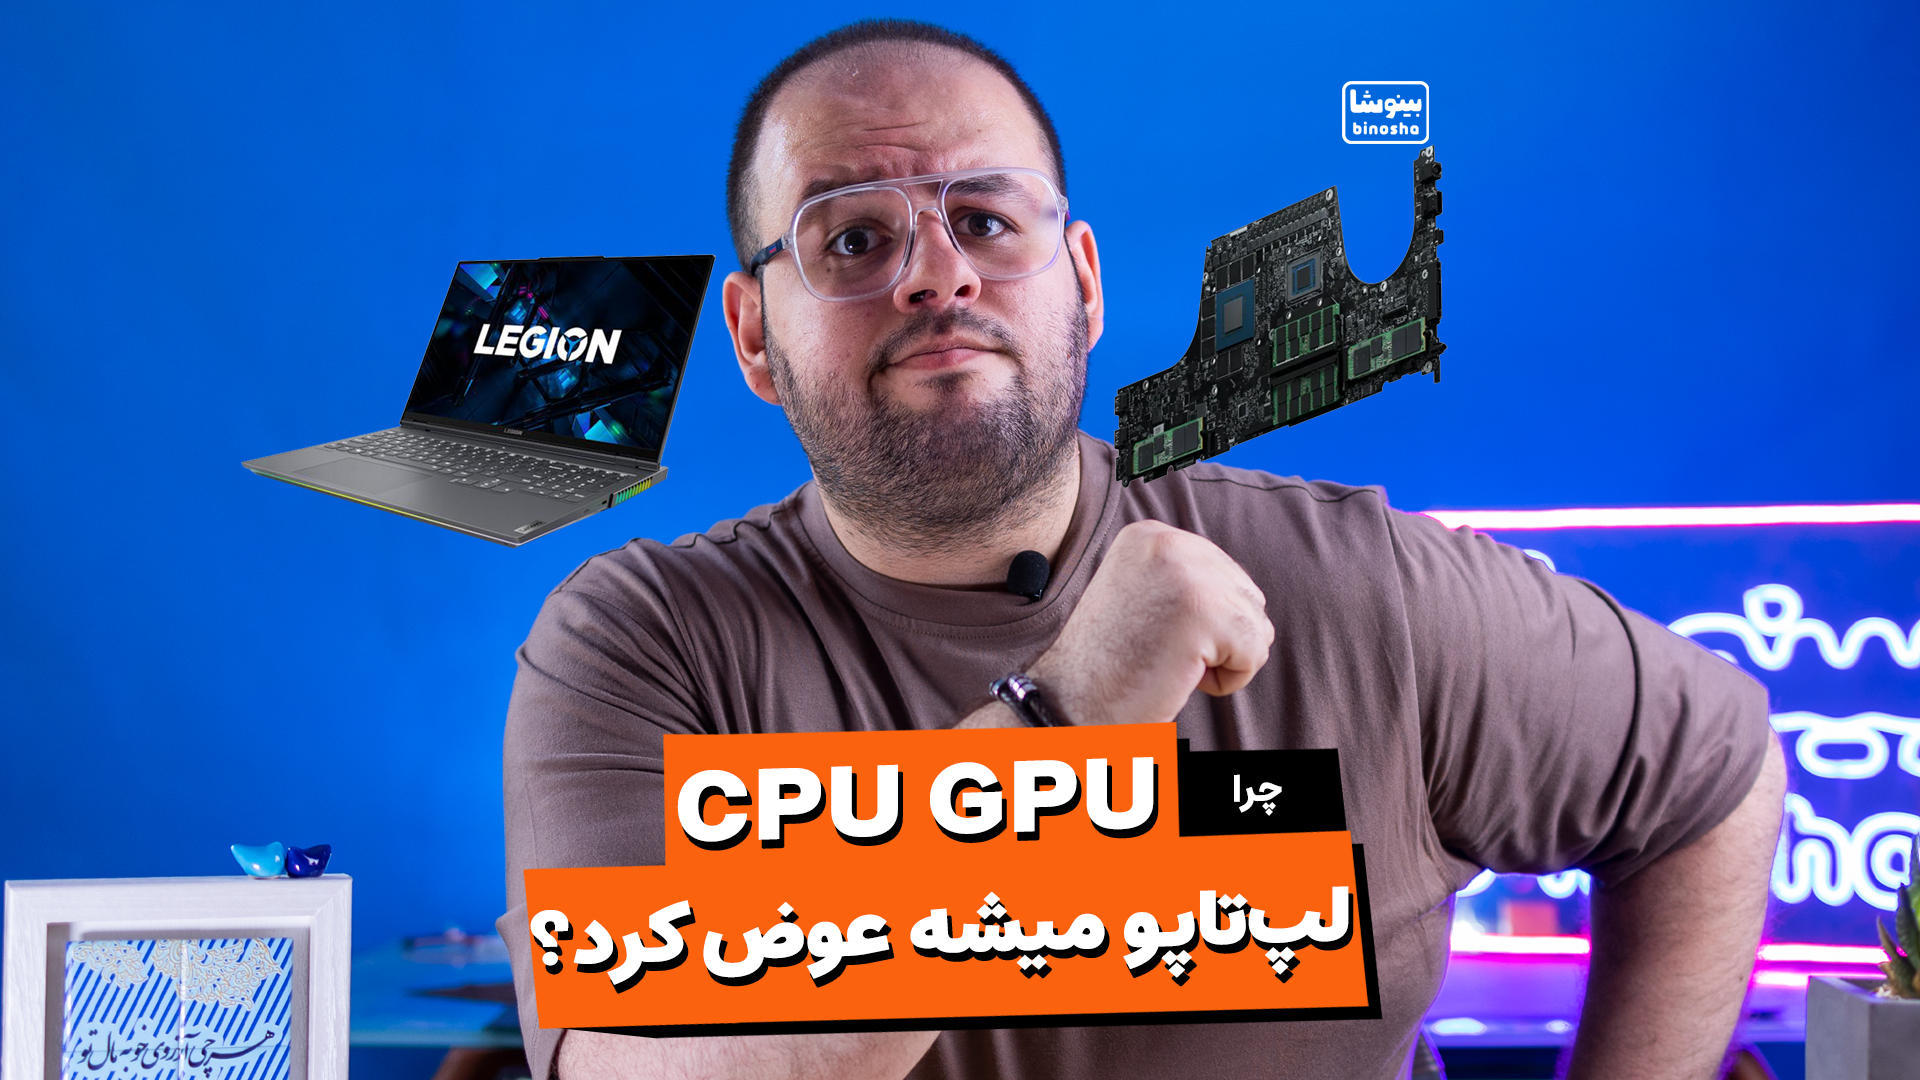 مگه میشه آخه CPU و GPU لپ تاپ رو عوض کرد؟؟؟